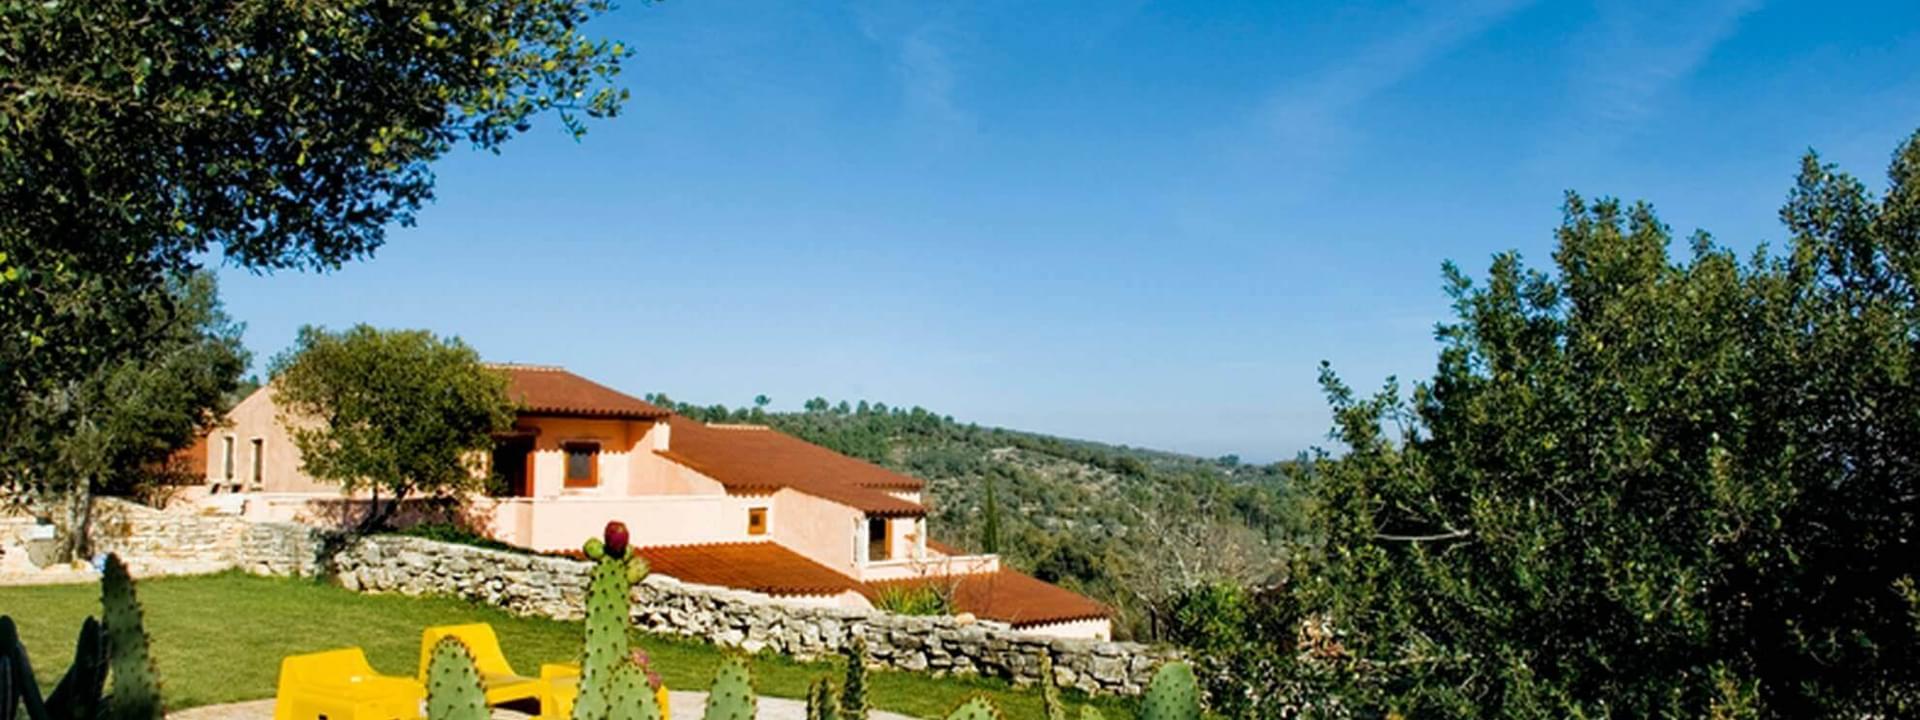 Villa Pedra Natural Houses